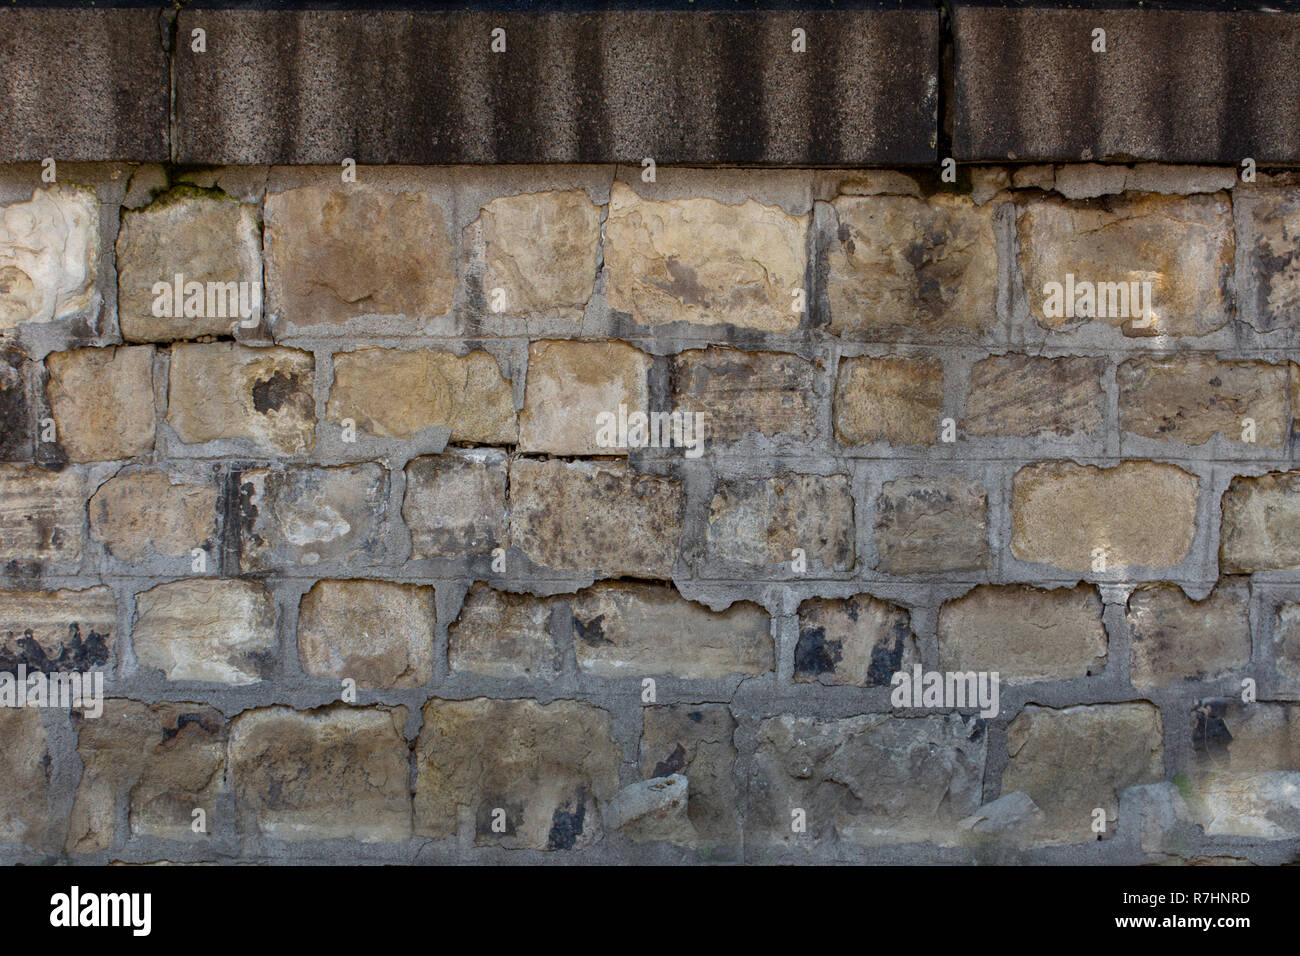 Wall with stone blocks texture. Stock Photo